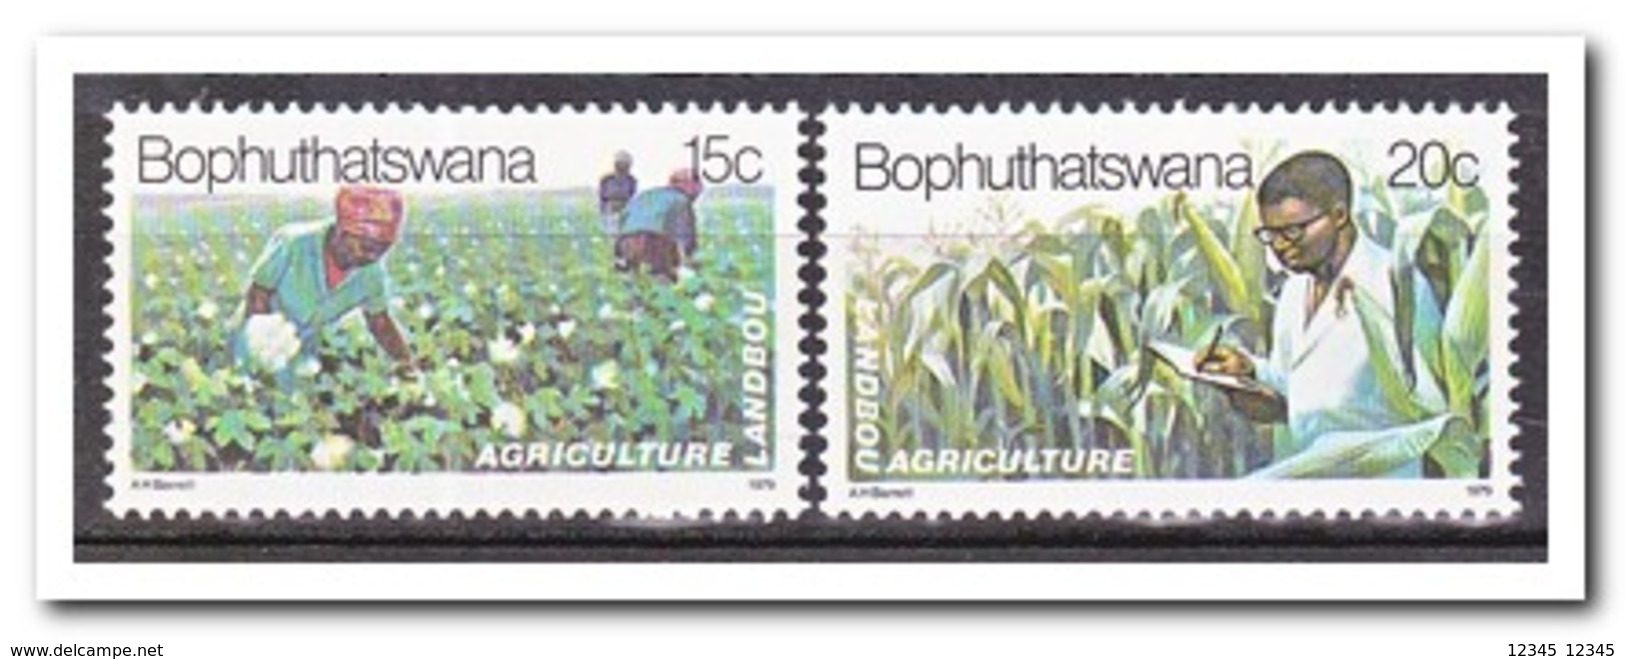 Bophutswana 1979, Postfris MNH, Agriculture, Plants - Bophuthatswana